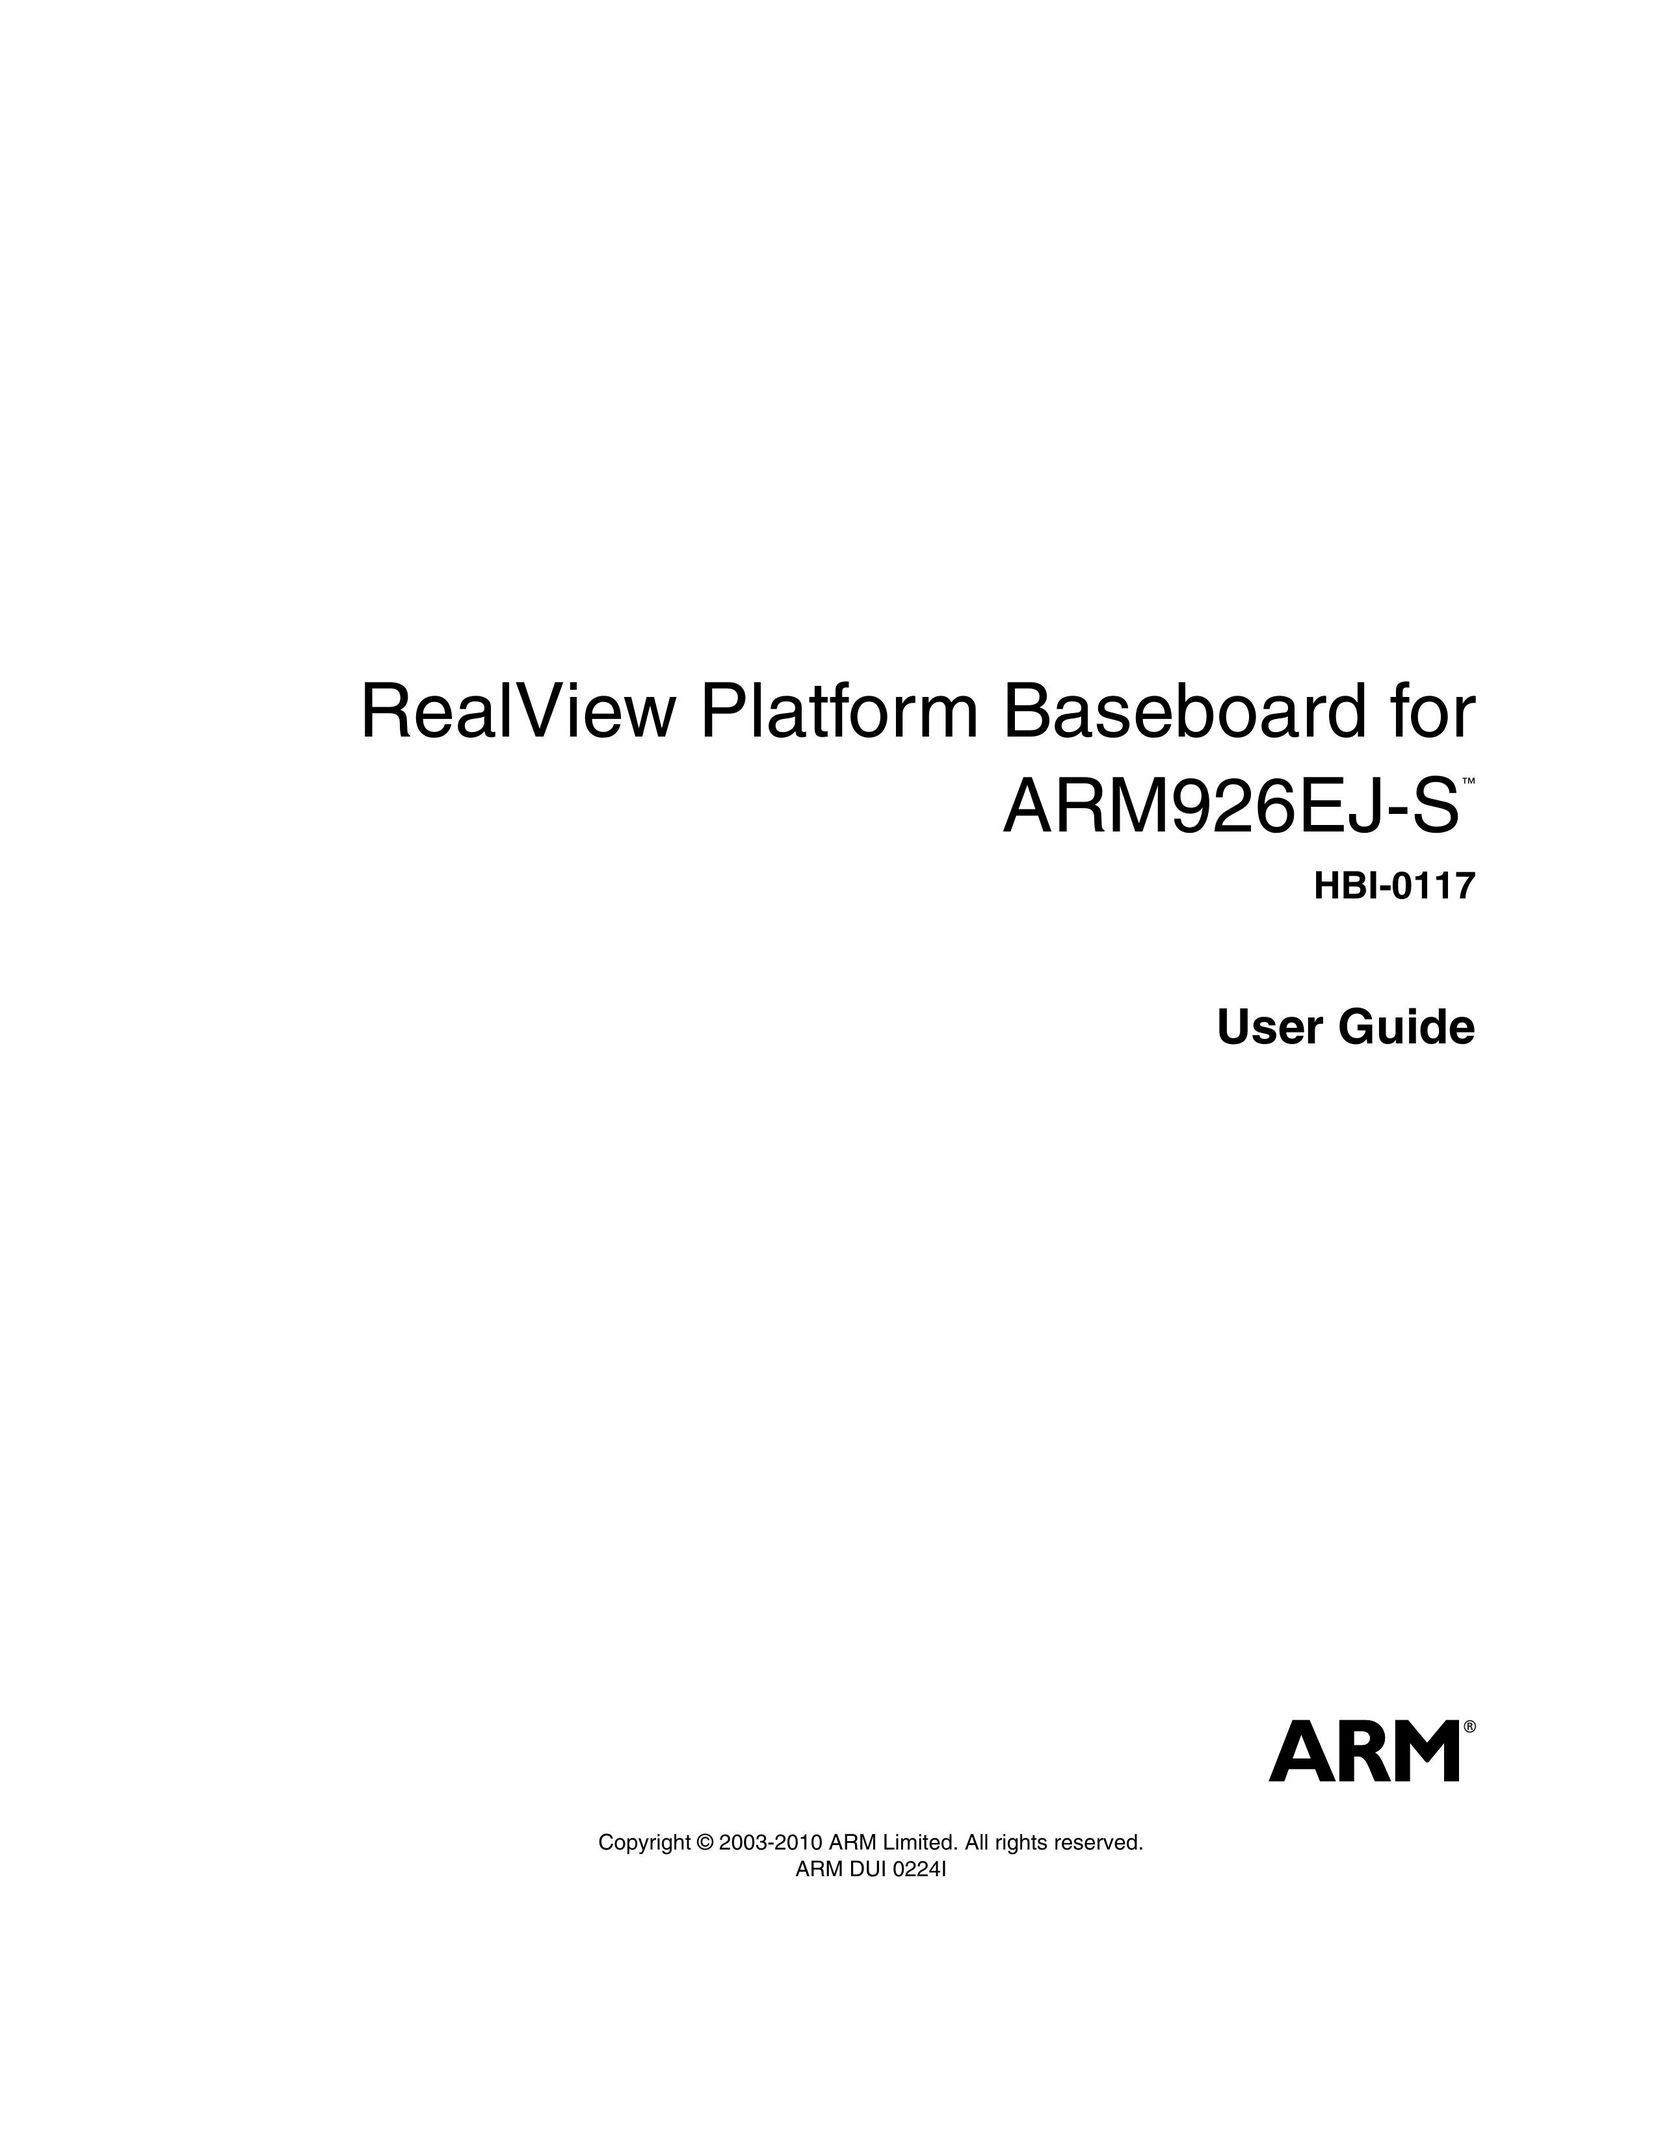 ARM ARM DUI 0224I Computer Hardware User Manual